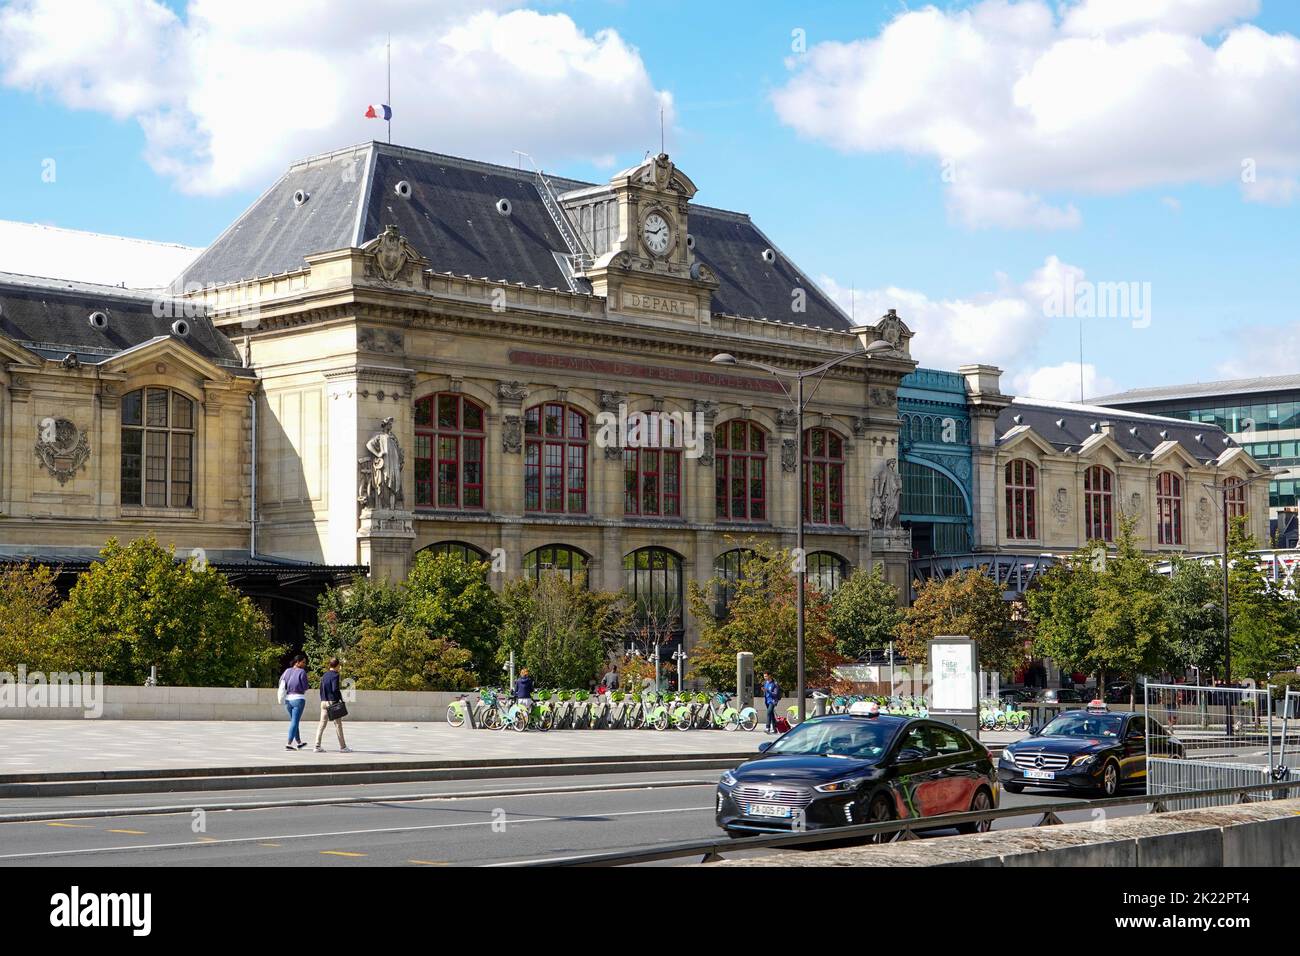 Gare d'Austerlitz, Austerlitz Station, Paris-Austerlitz, historic railway station located in the 13th Arrondissement, Left Bank, Paris, France. Stock Photo